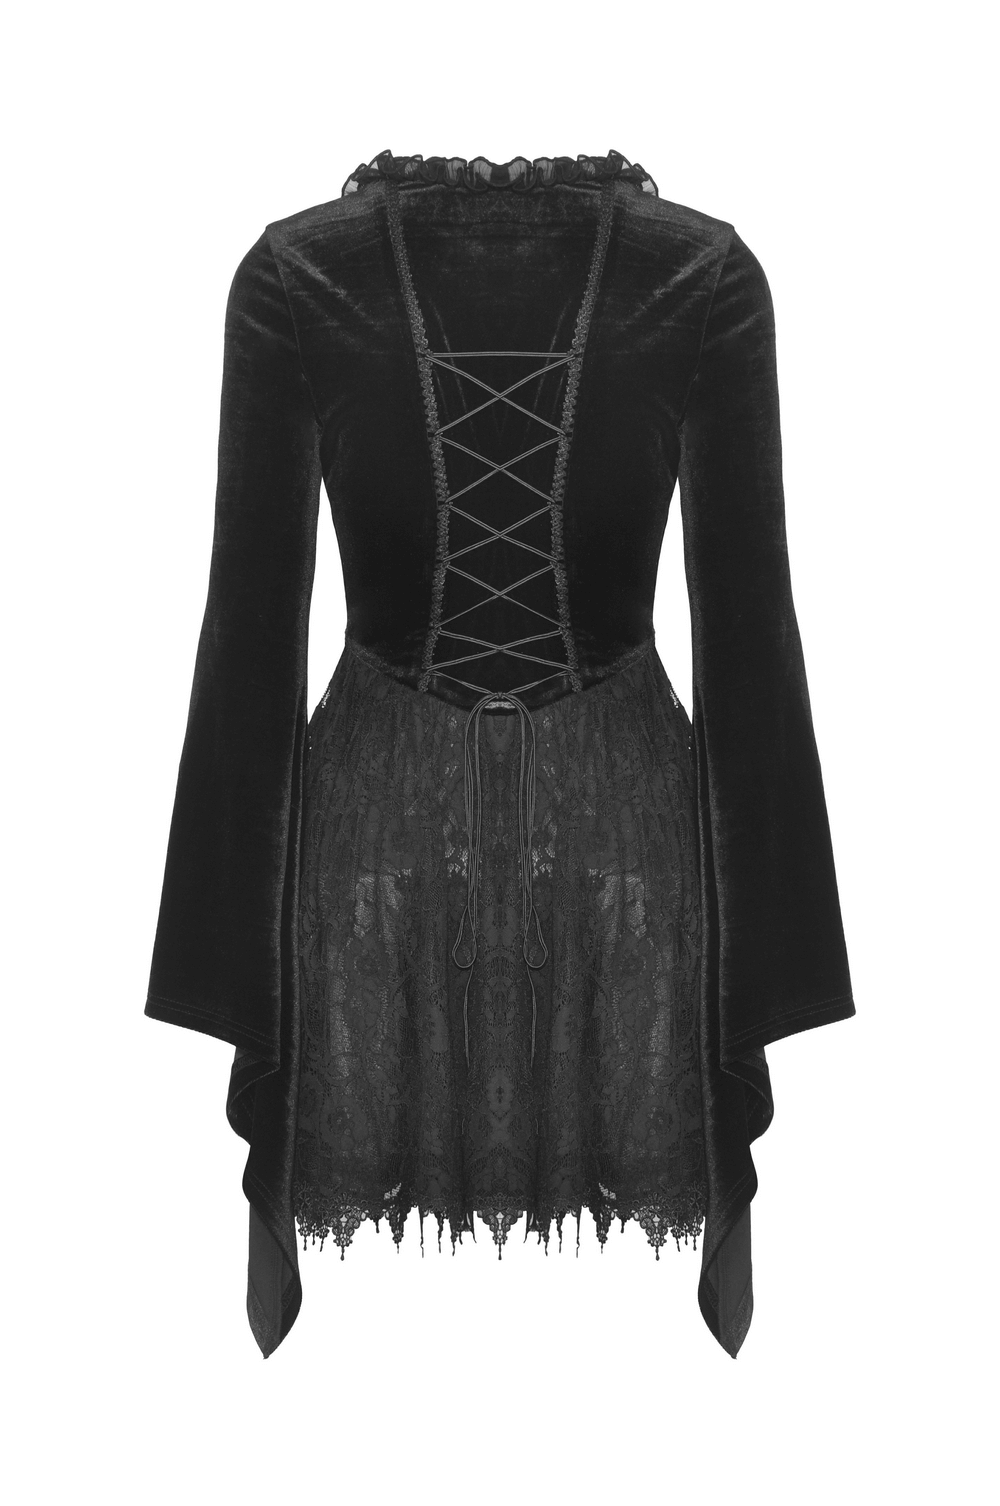 Elegant Black Velvet Gothic Dress with Lace-Up Detail